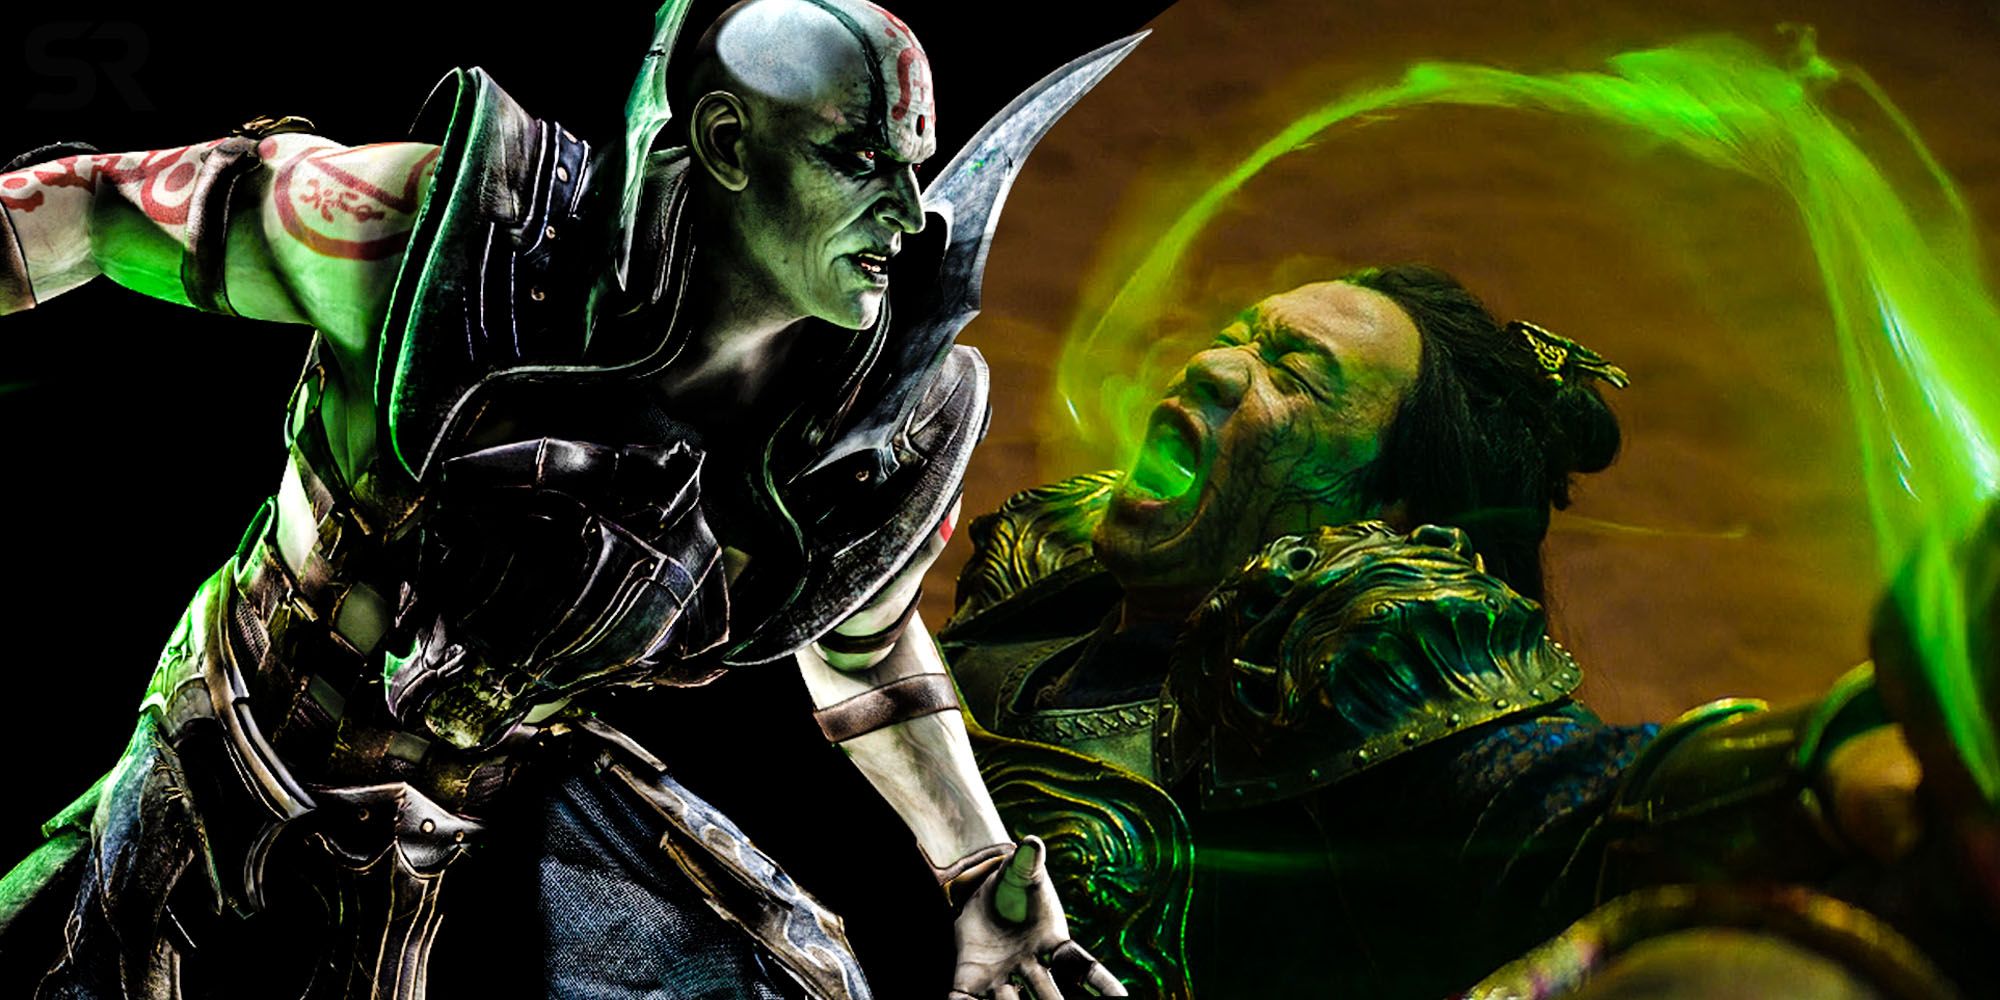 Theory Mortal Kombat 2s Villain Is Quan Chi (Despite Shao Khan Hints)